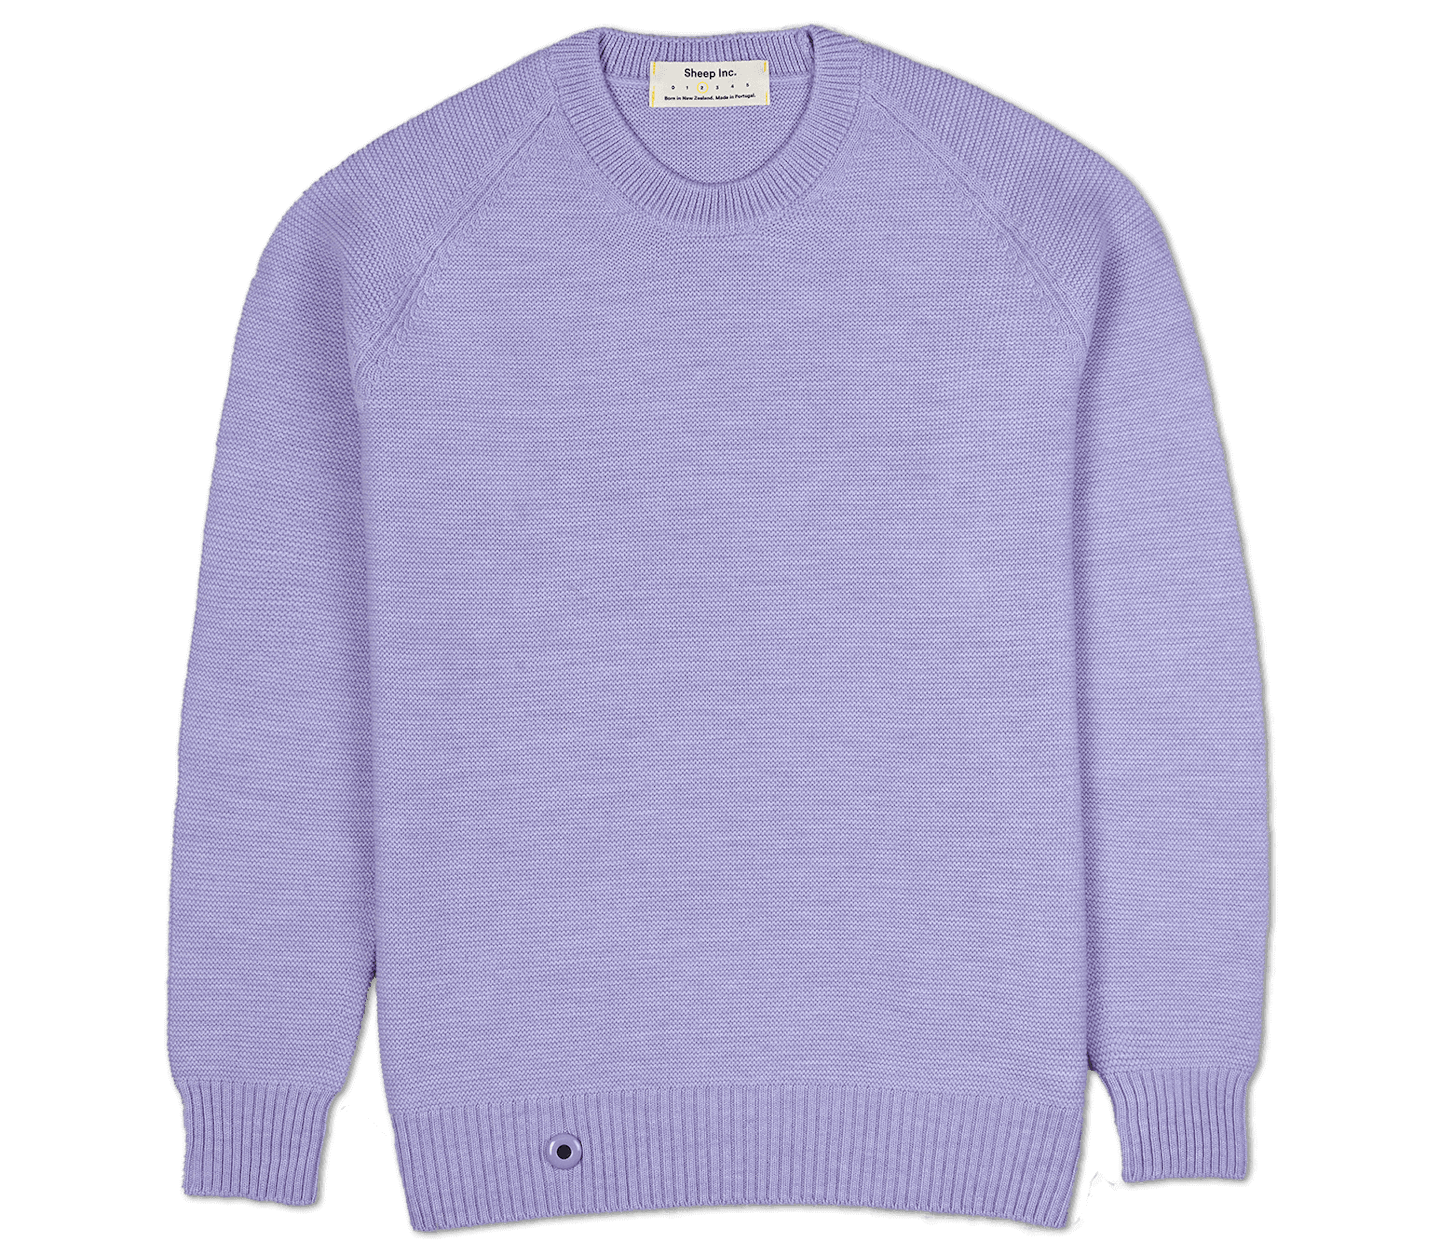 Sheep Inc, 001 Medium Knit Lupin Lilac, £160